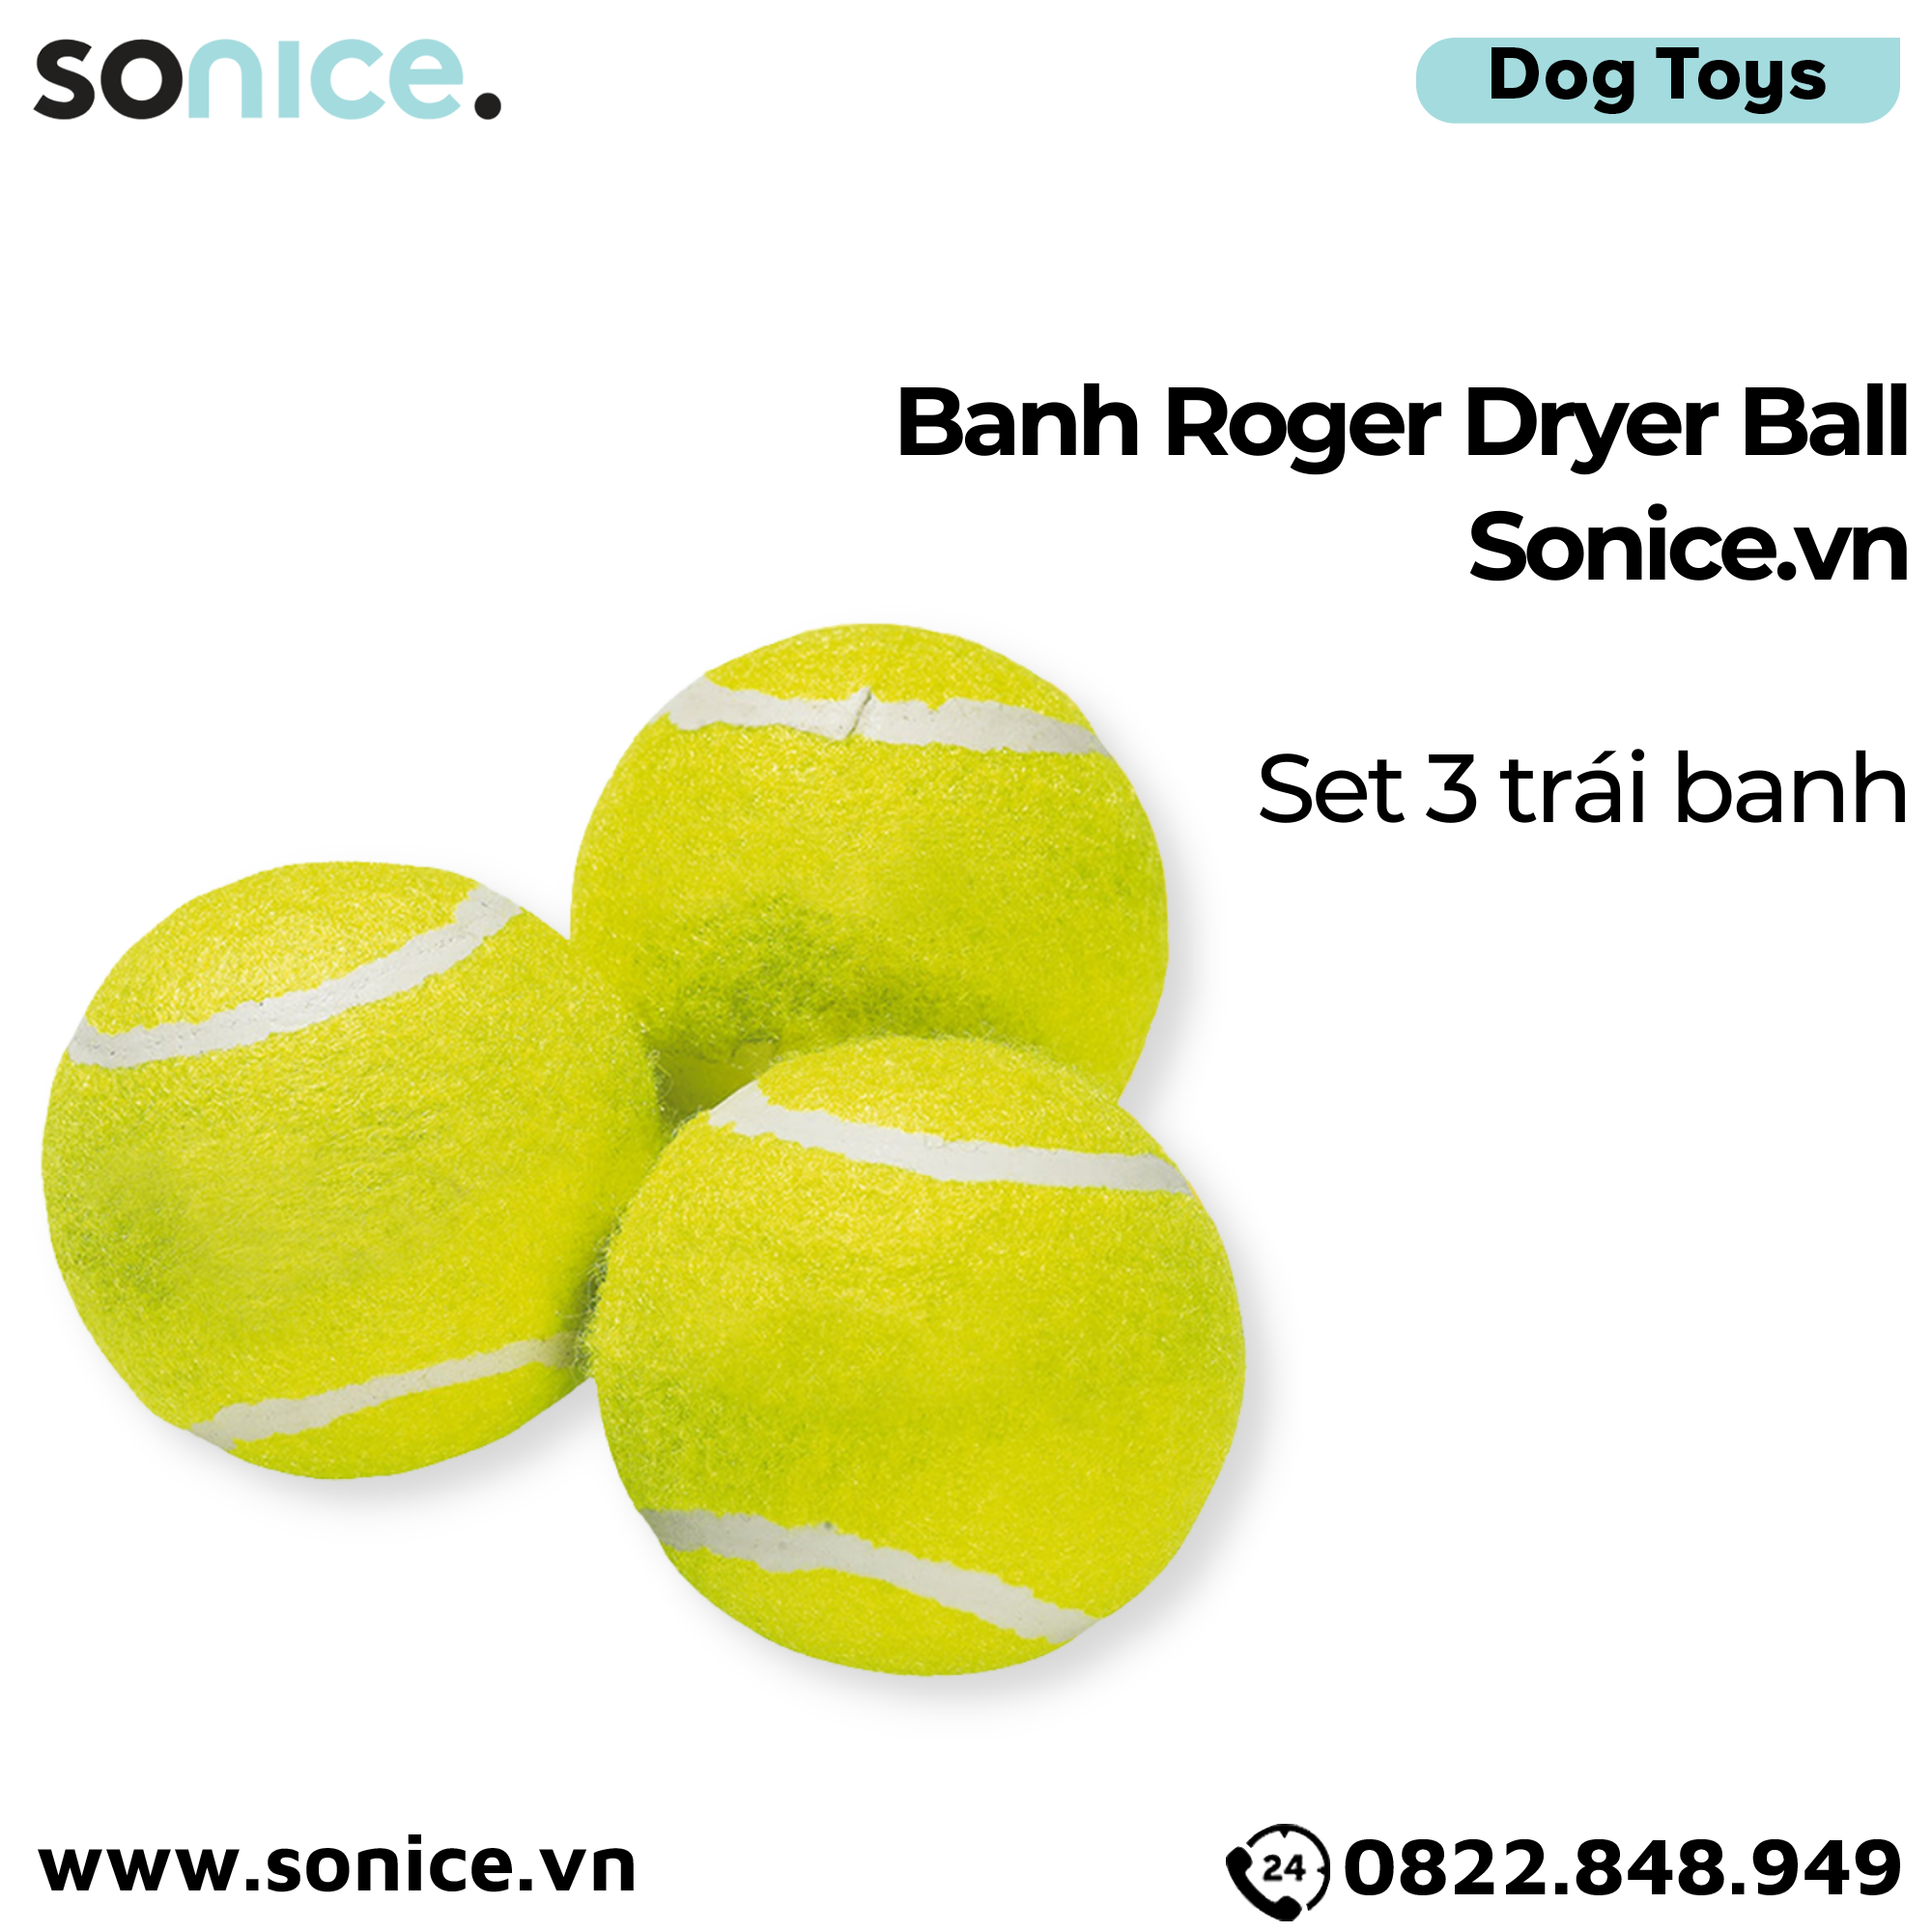  Banh Roger Dryer Ball - Set 3 trái SONICE. 